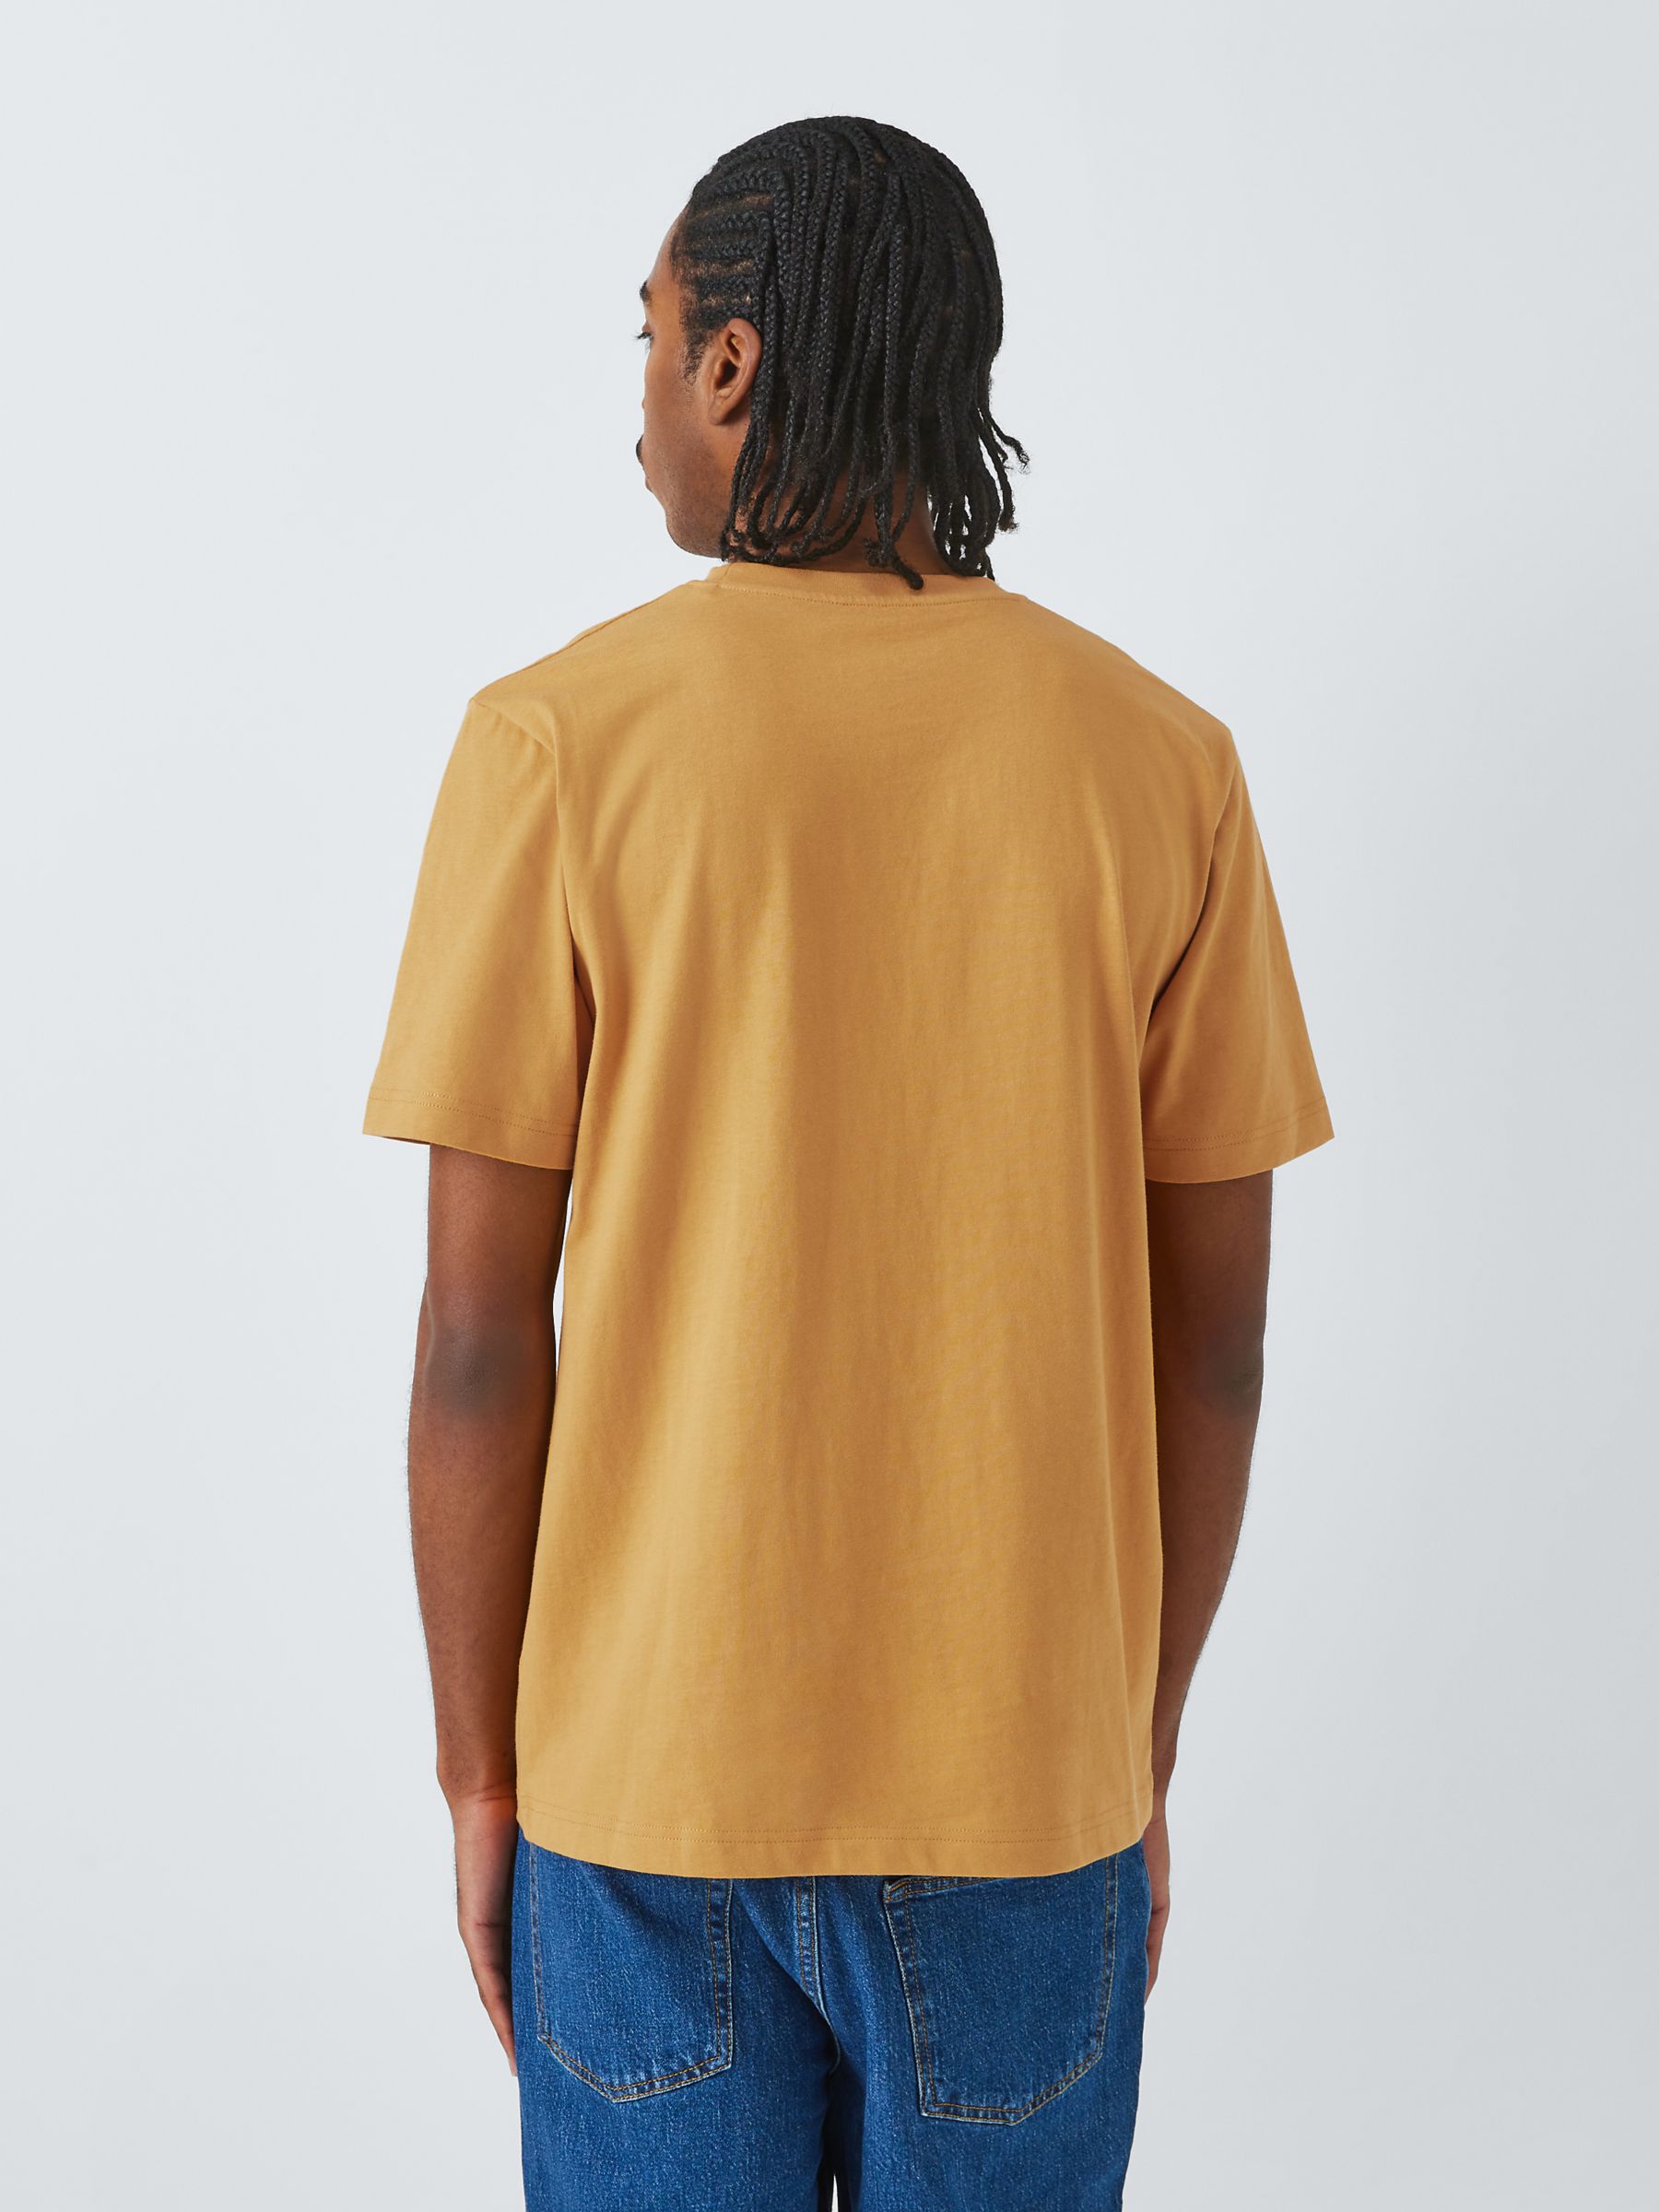 John Lewis ANYDAY Short Sleeve Plain T-Shirt, Honey Yellow, S